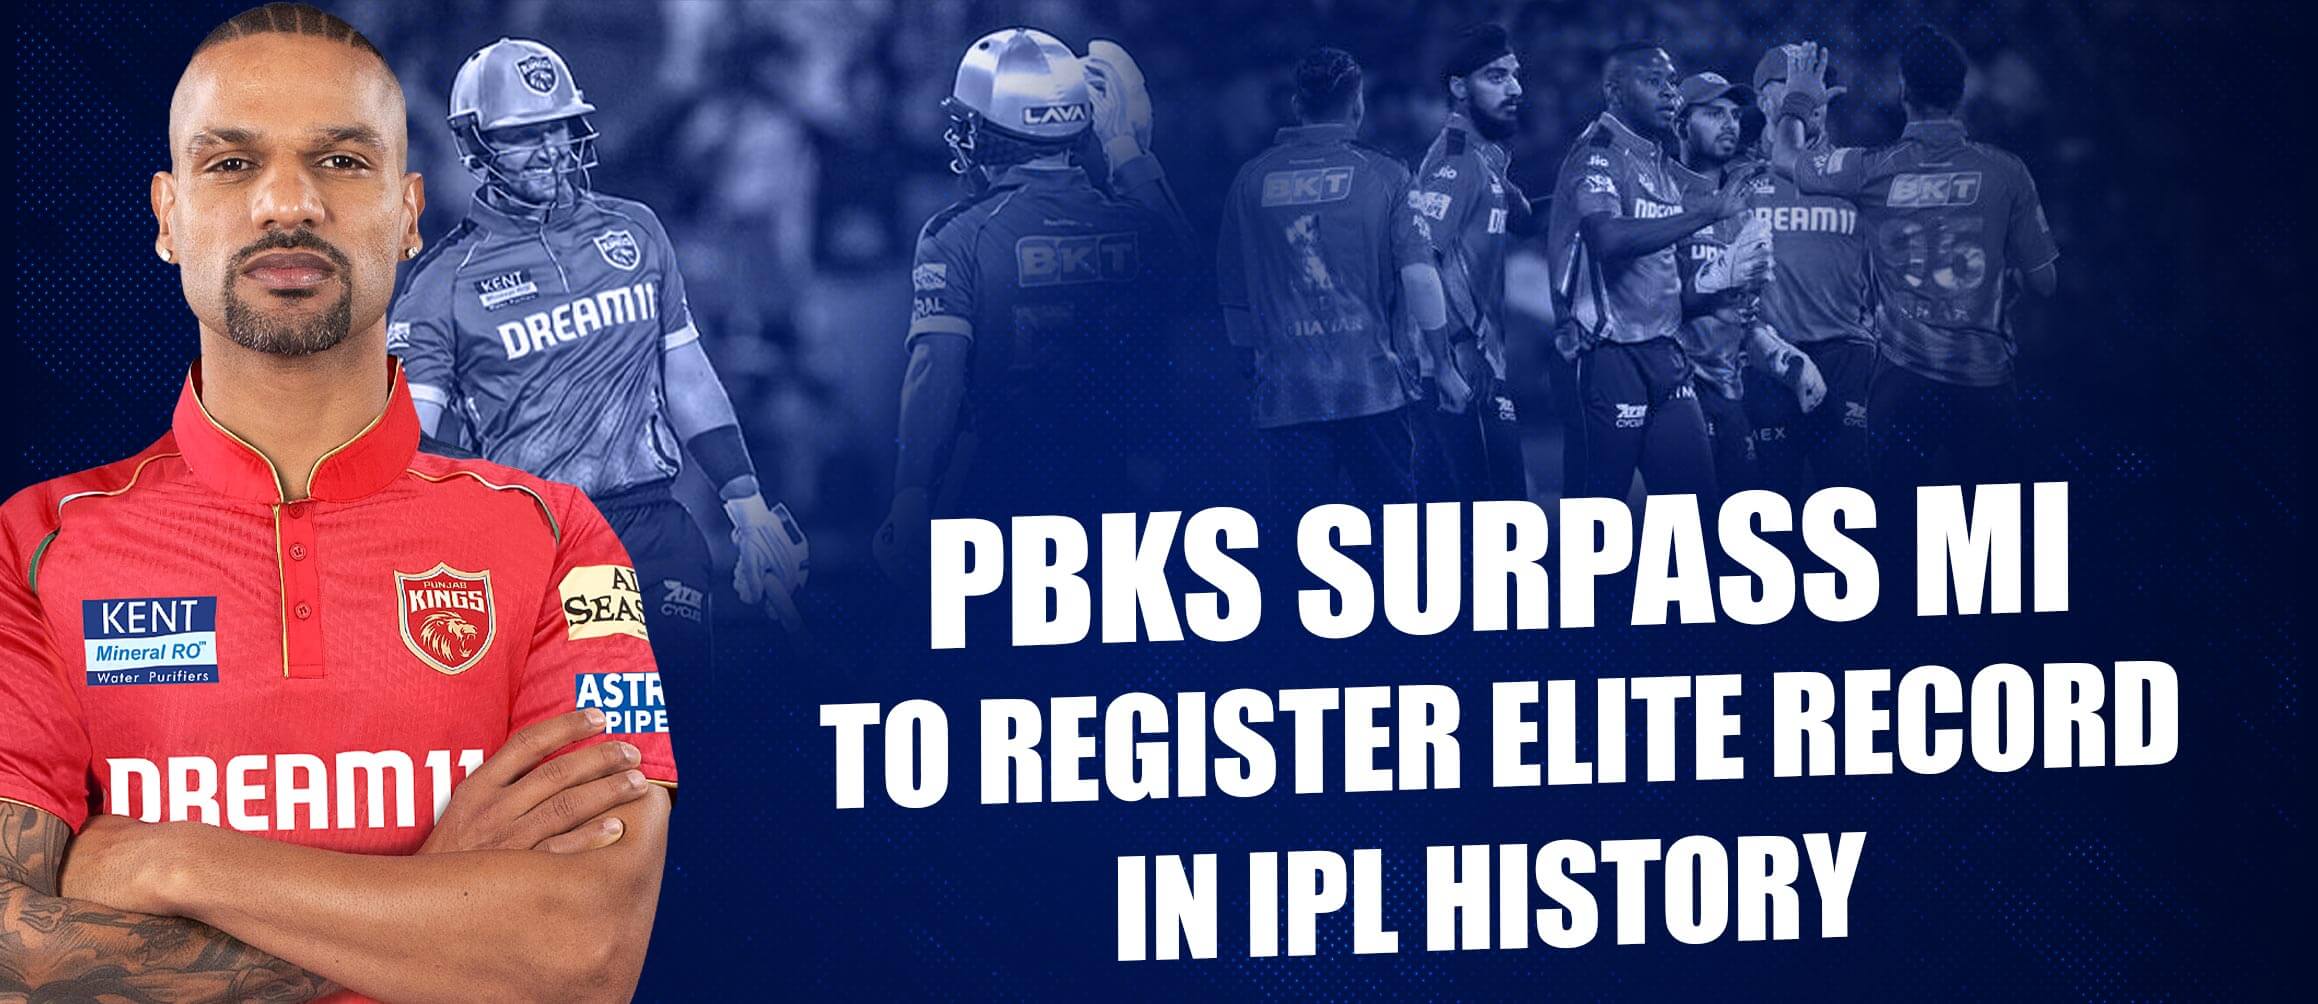 PBKS Surpass MI to Register Elite Record in IPL History